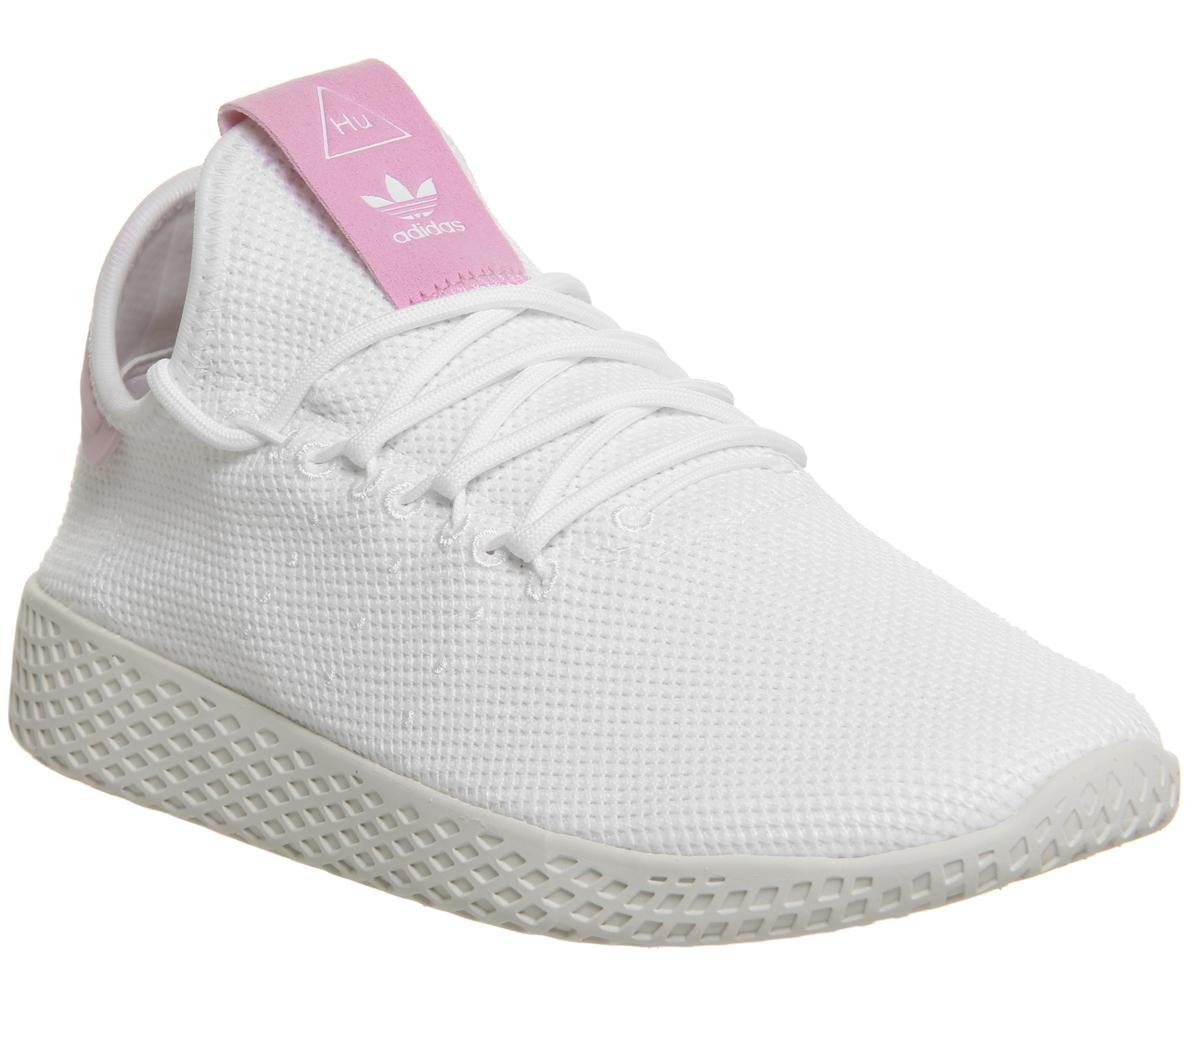 adidas Pw Tennis Hu White White Pink F - Hers trainers